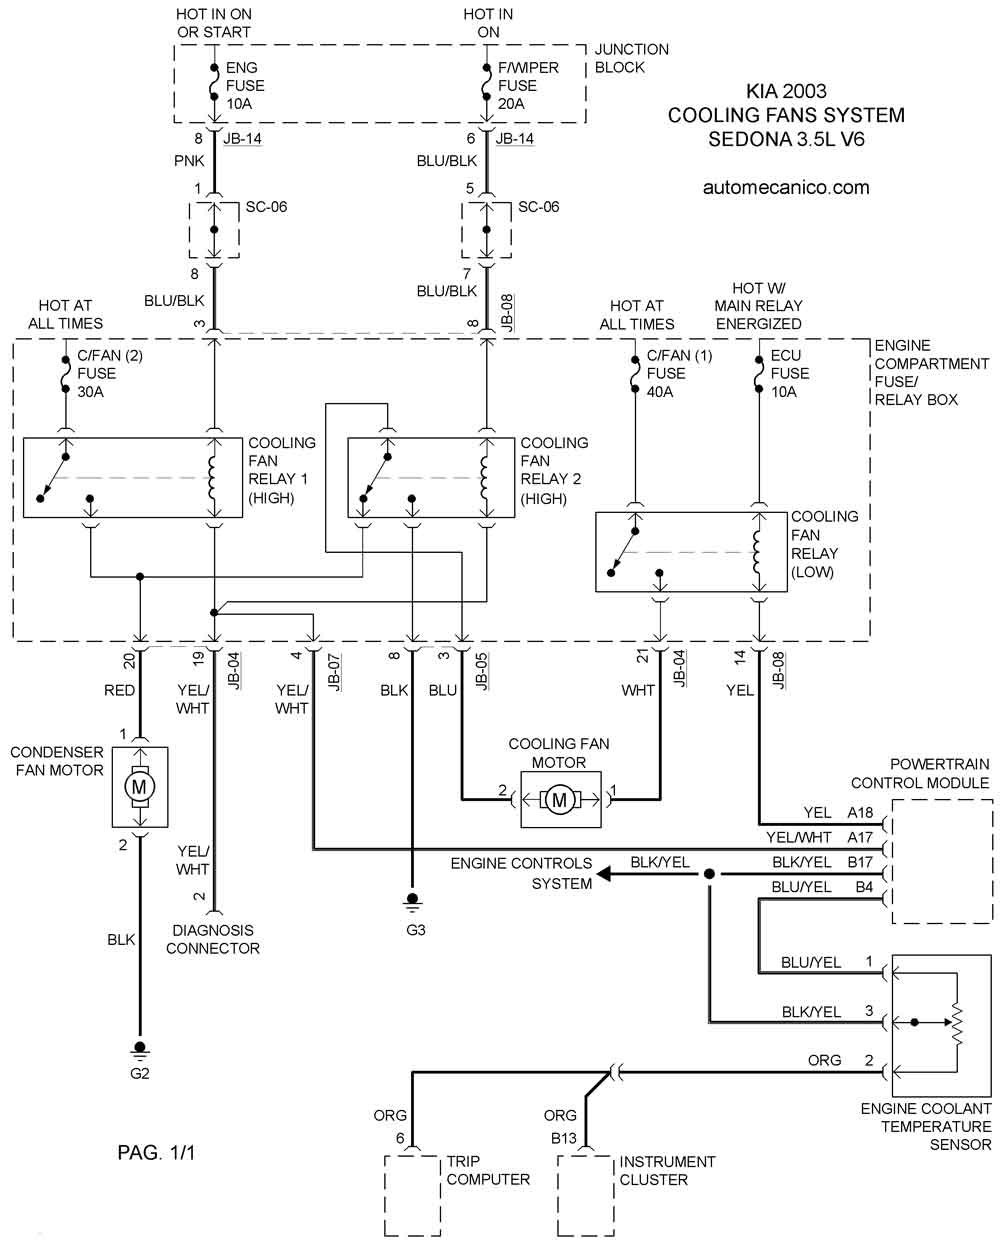 Diagrama De Luces De Kia Sedona 2003 Kia Cooling Fans System Diagramas Ventiladores Abanicos Vehiculos 2003